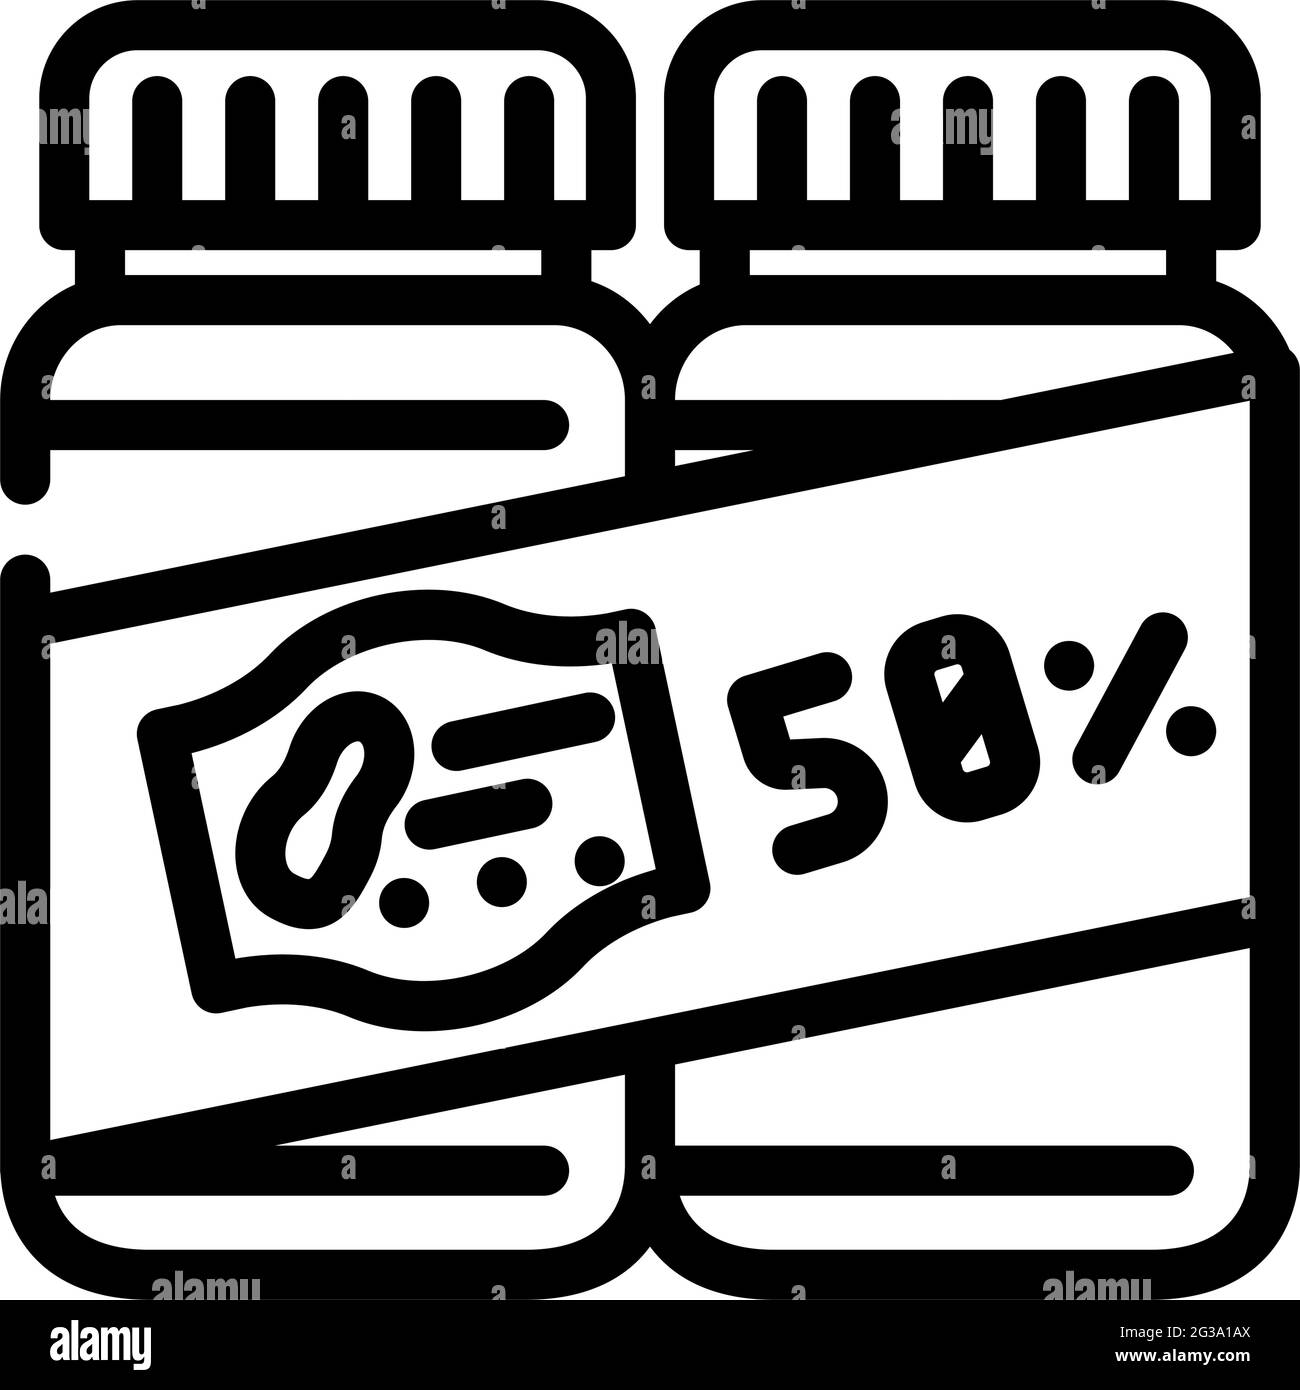 sale discount peanut butter bottles line icon vector illustration Stock Vector